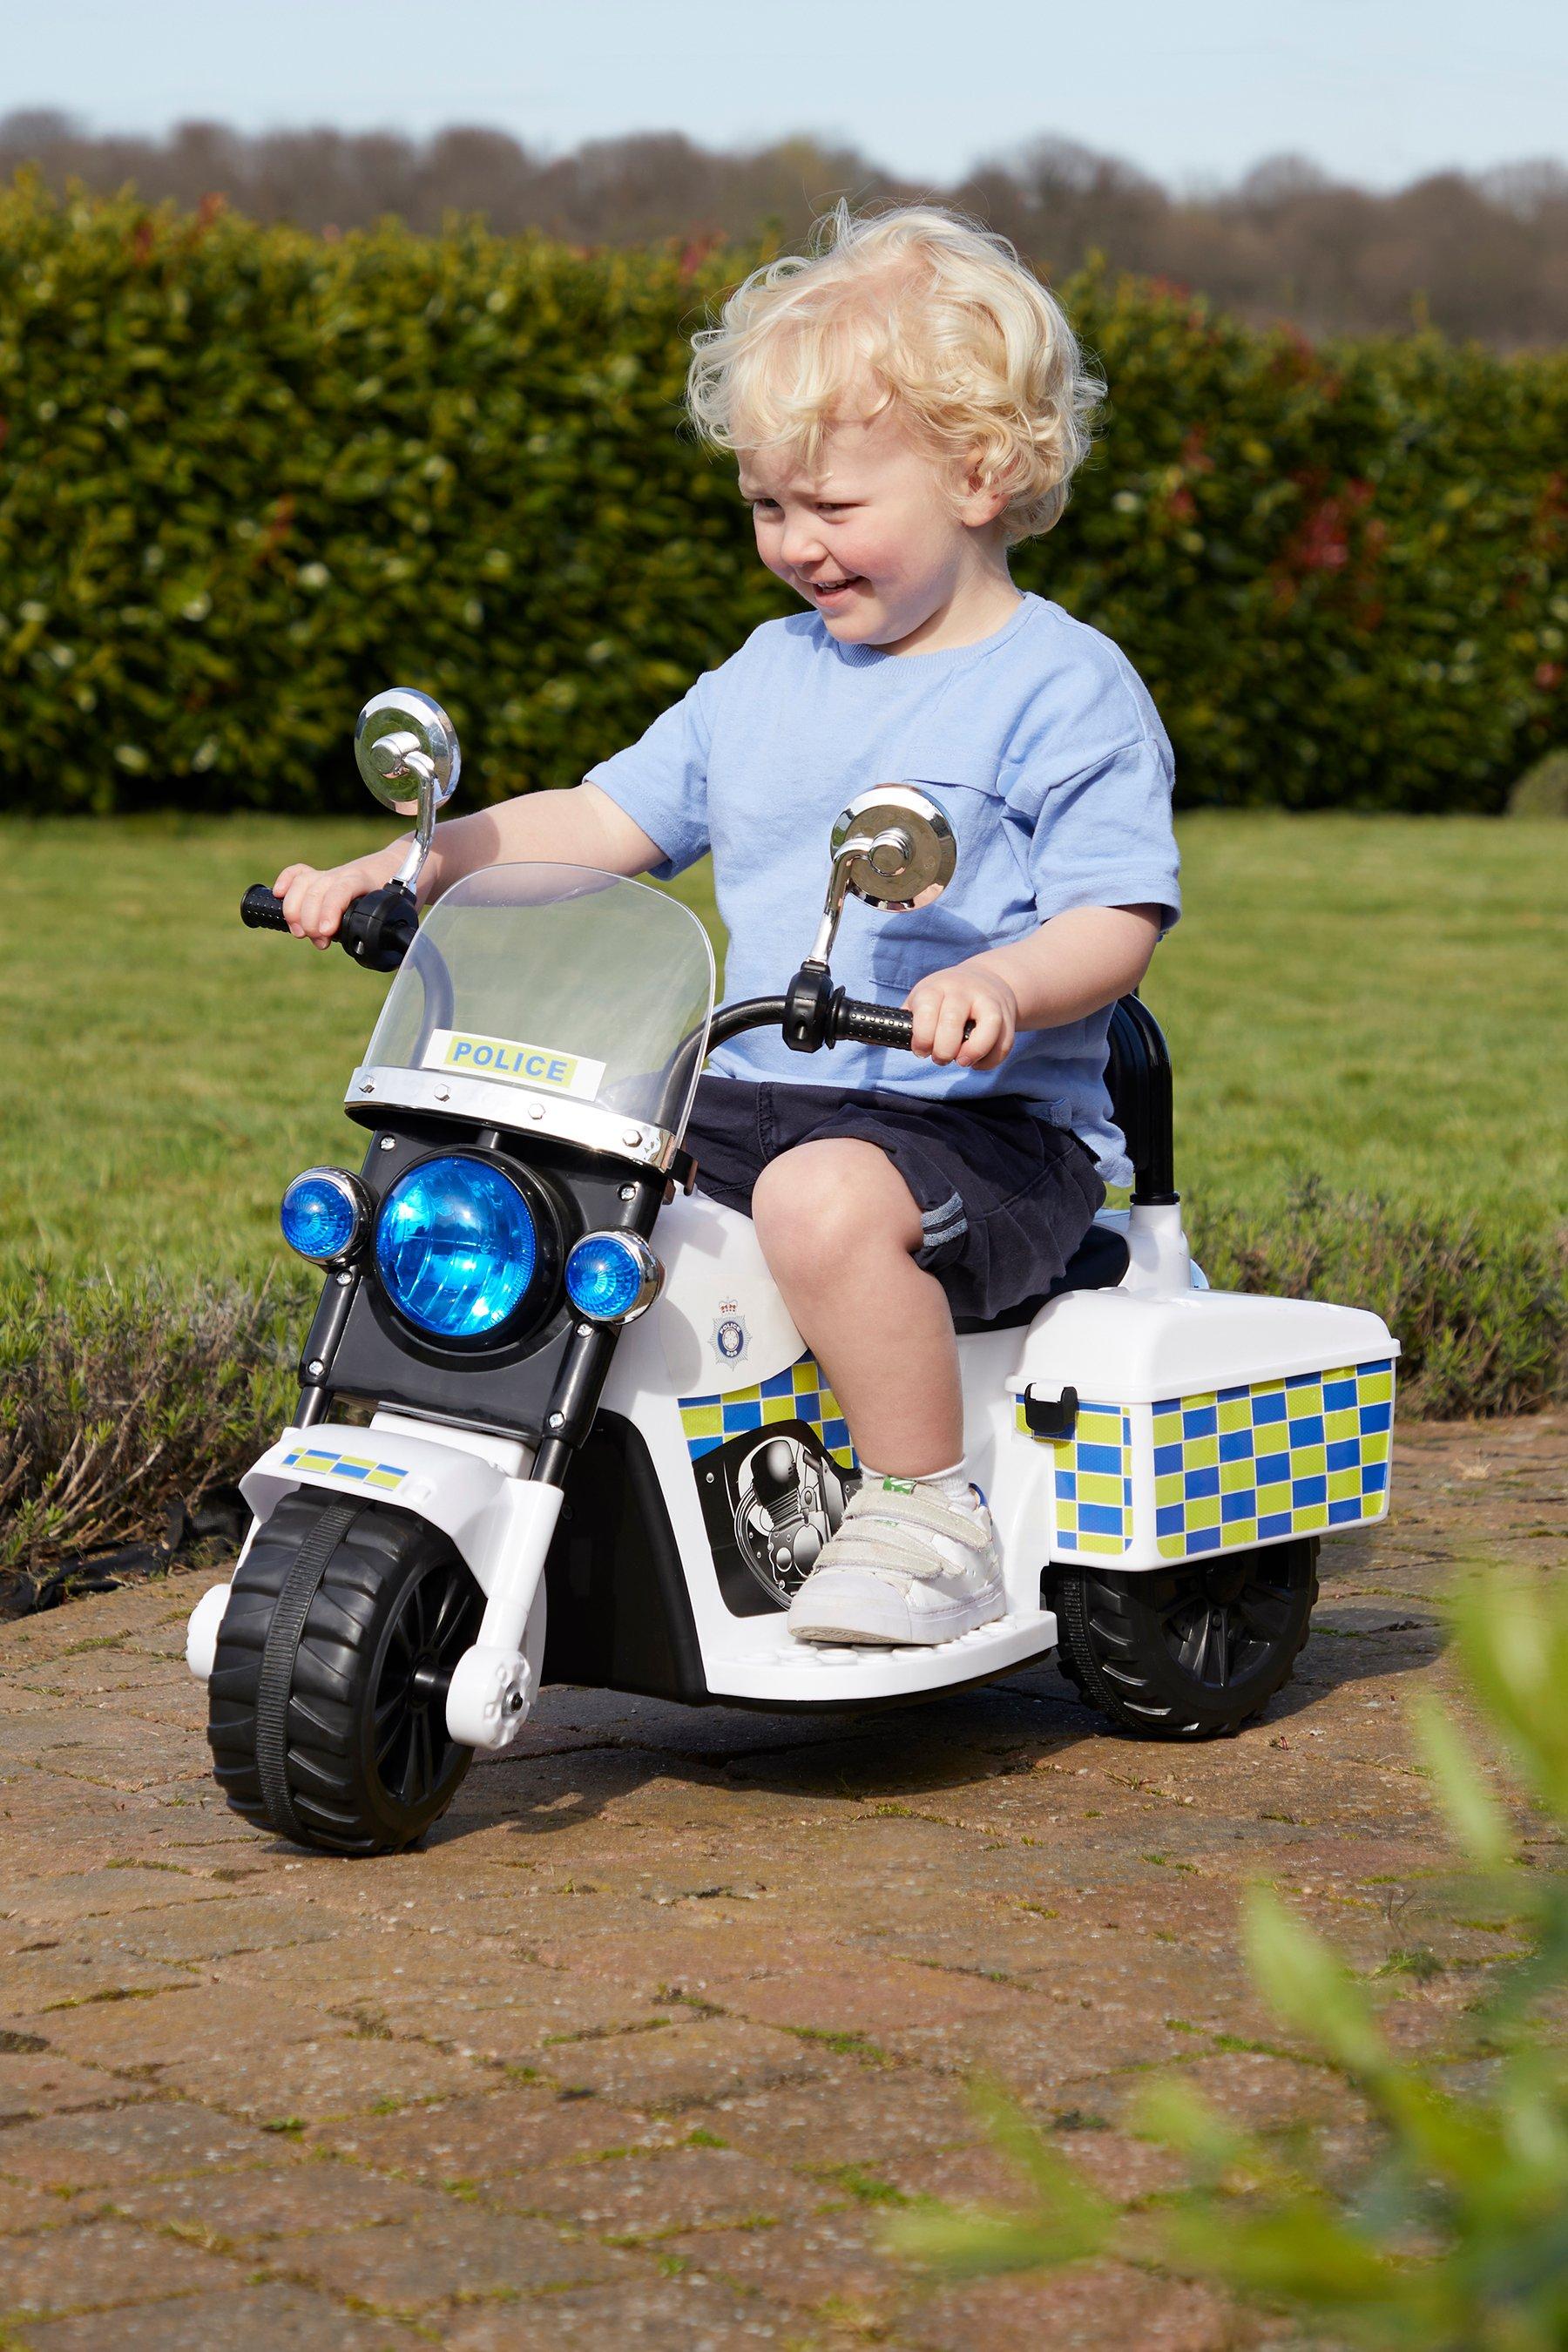 childrens electric police motorbike